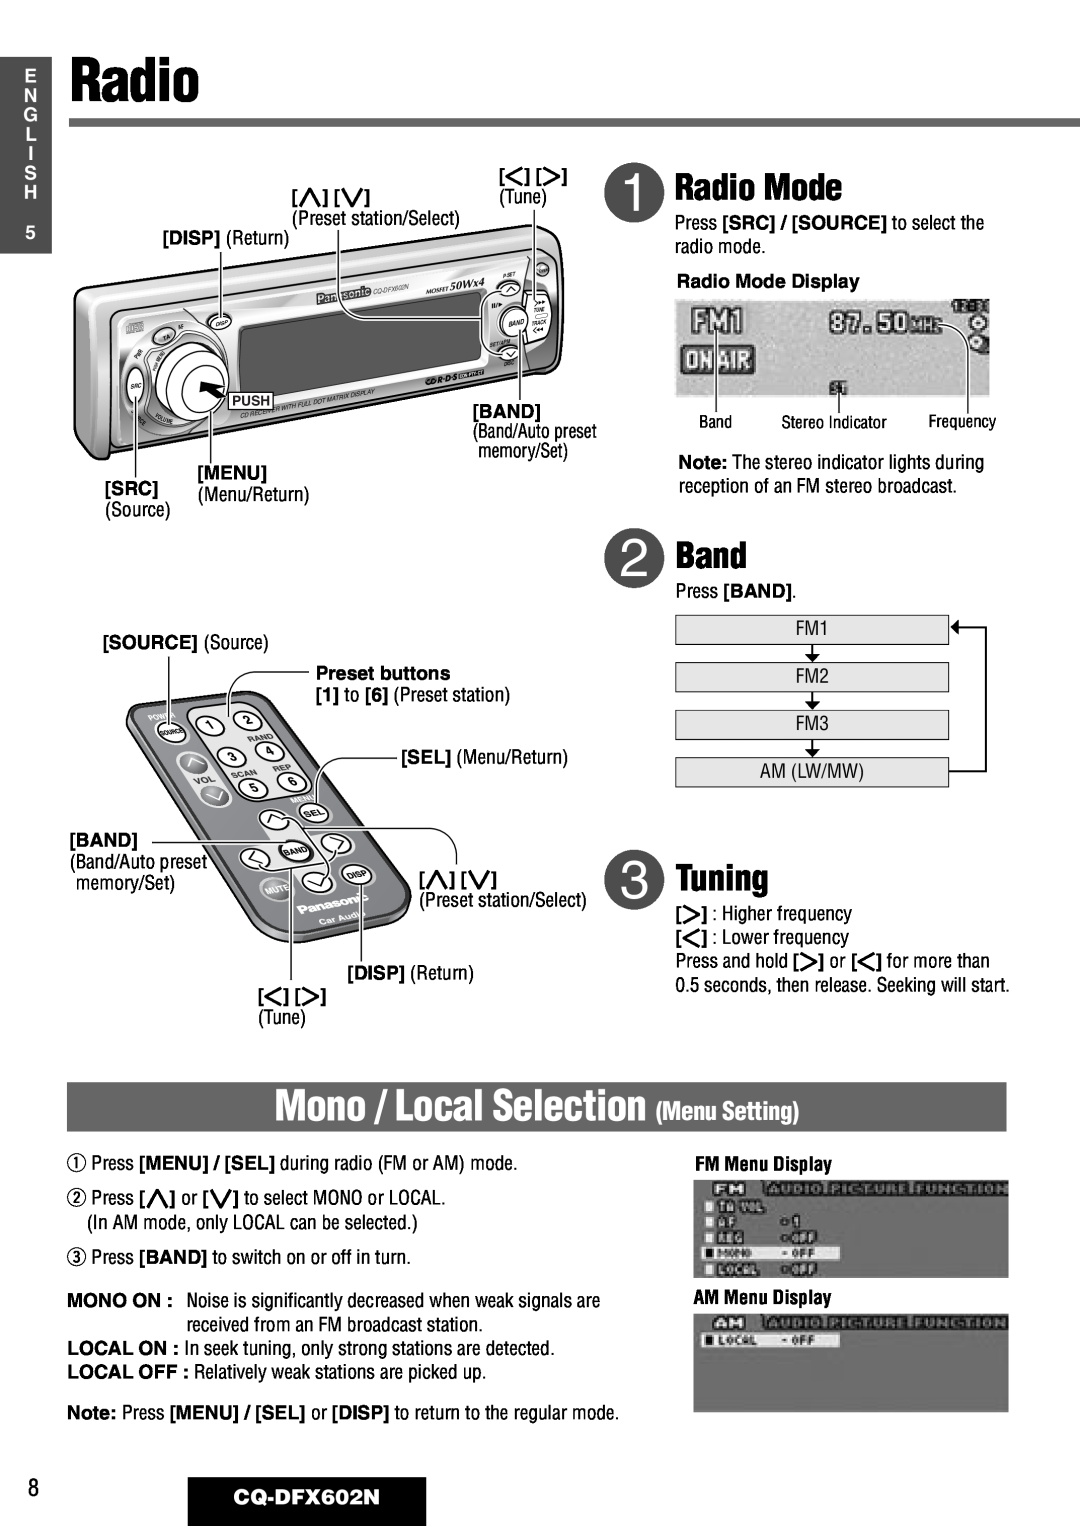 Panasonic manual Mono / Local Selection Menu Setting, Radio Mode, Band, Tuning, 8CQ-DFX602N 